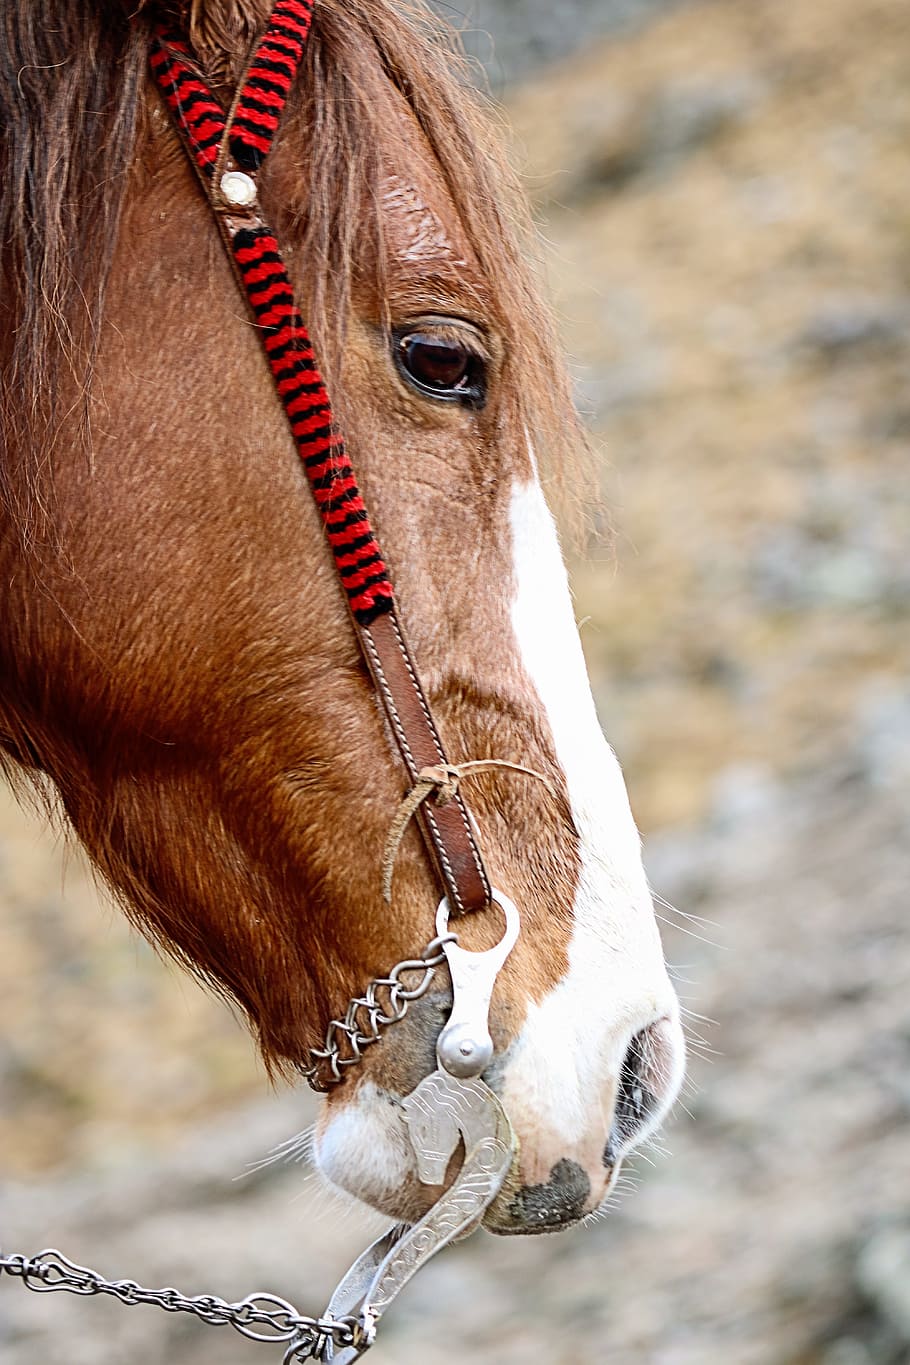 Horse, Burden, Animal, Domestic, outdoors, transportation, mountain, rural, one animal, domestic animals